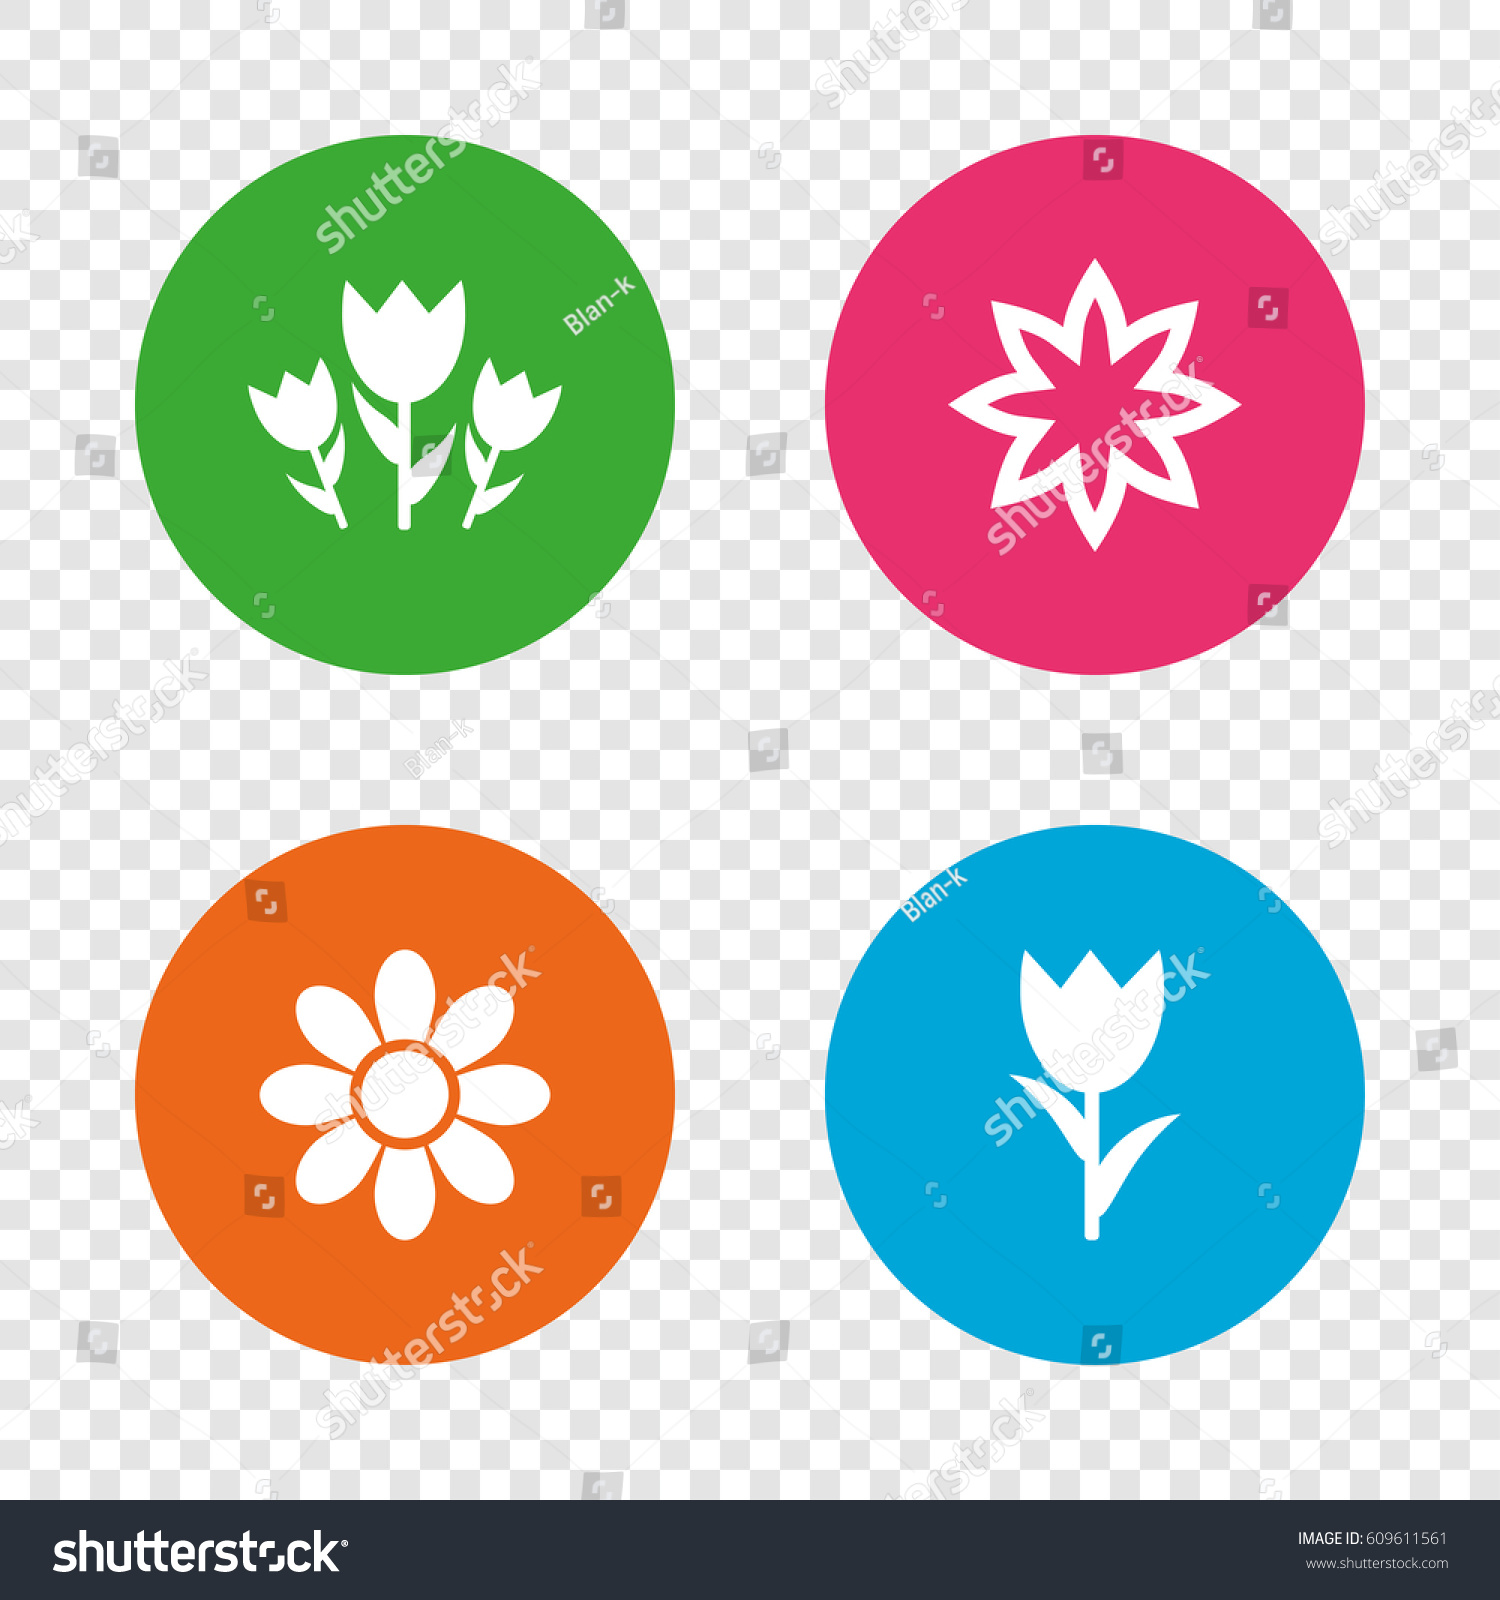 Edit Vectors Free Online - Flowers icons. | Shutterstock Editor